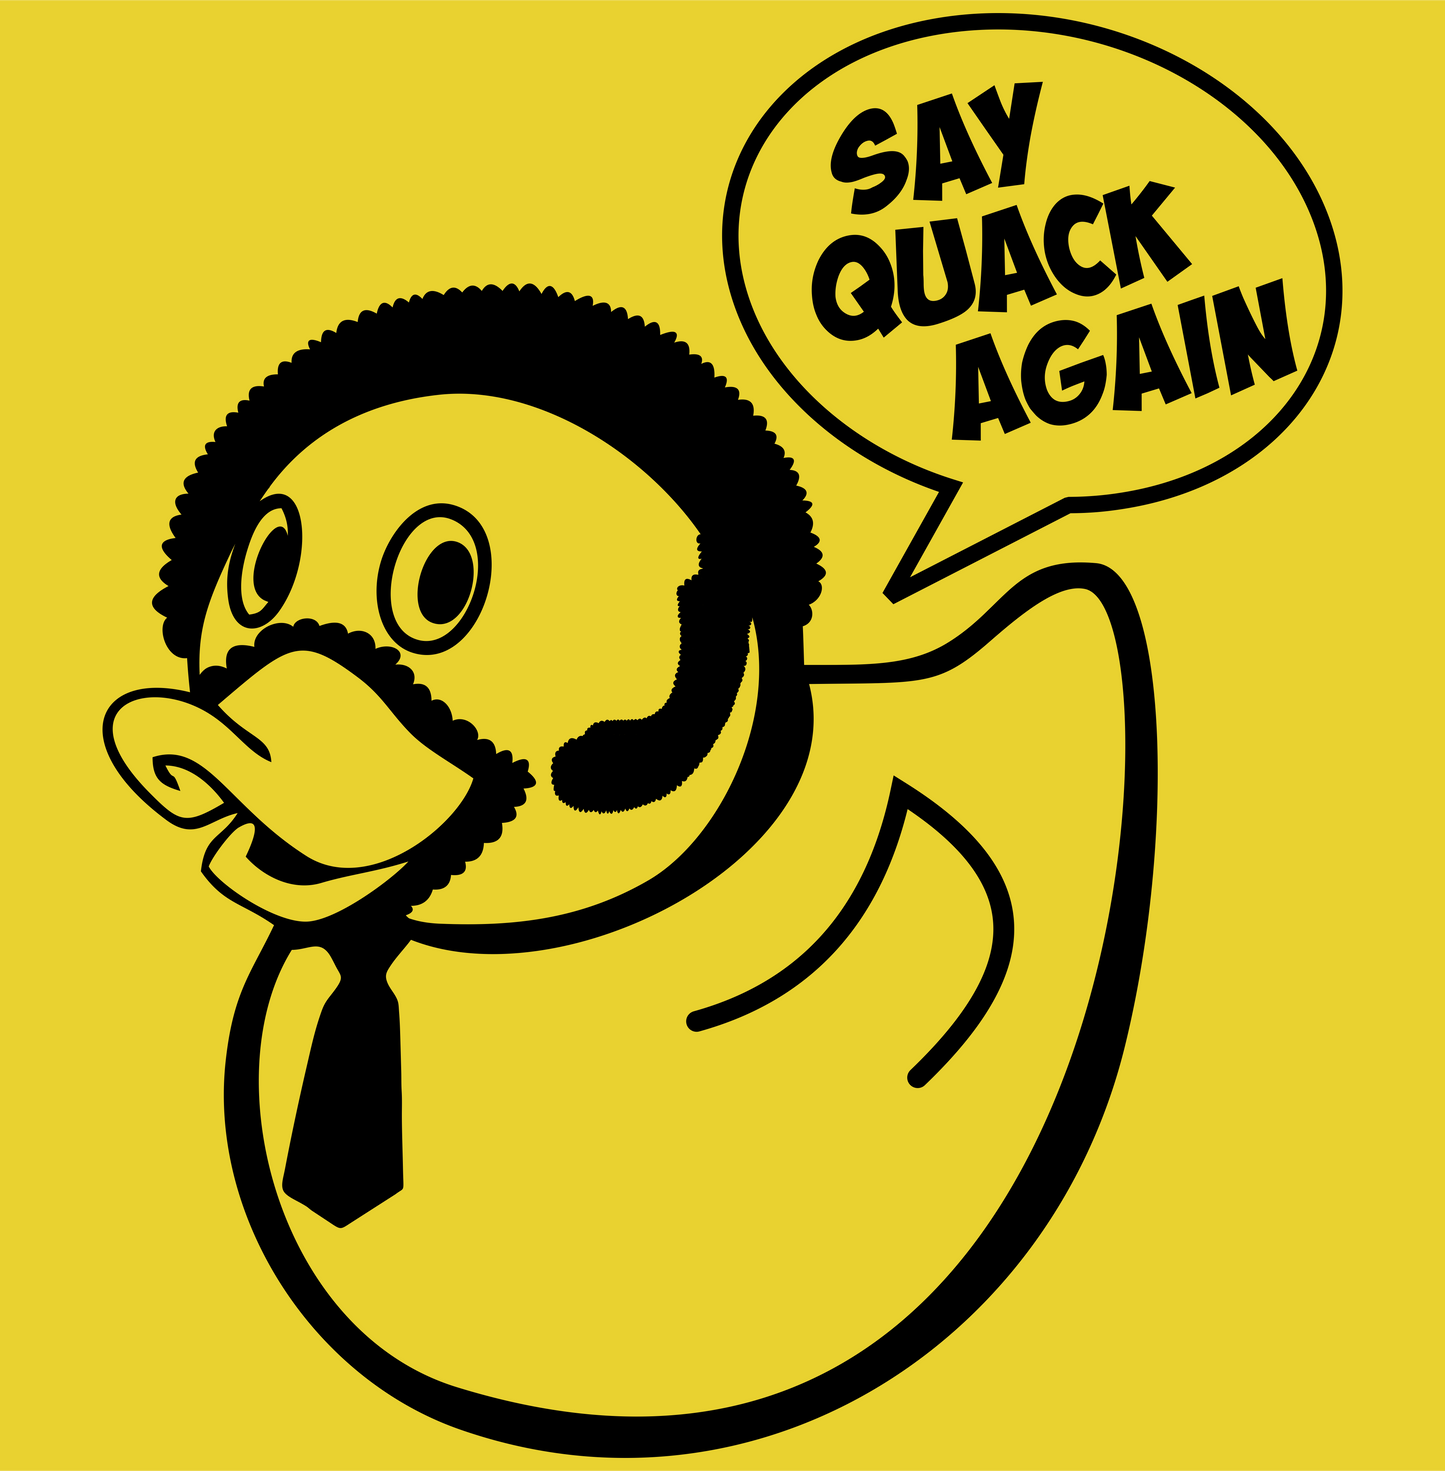 say quack again pulp fiction spoof rubber duck DTG design graphic